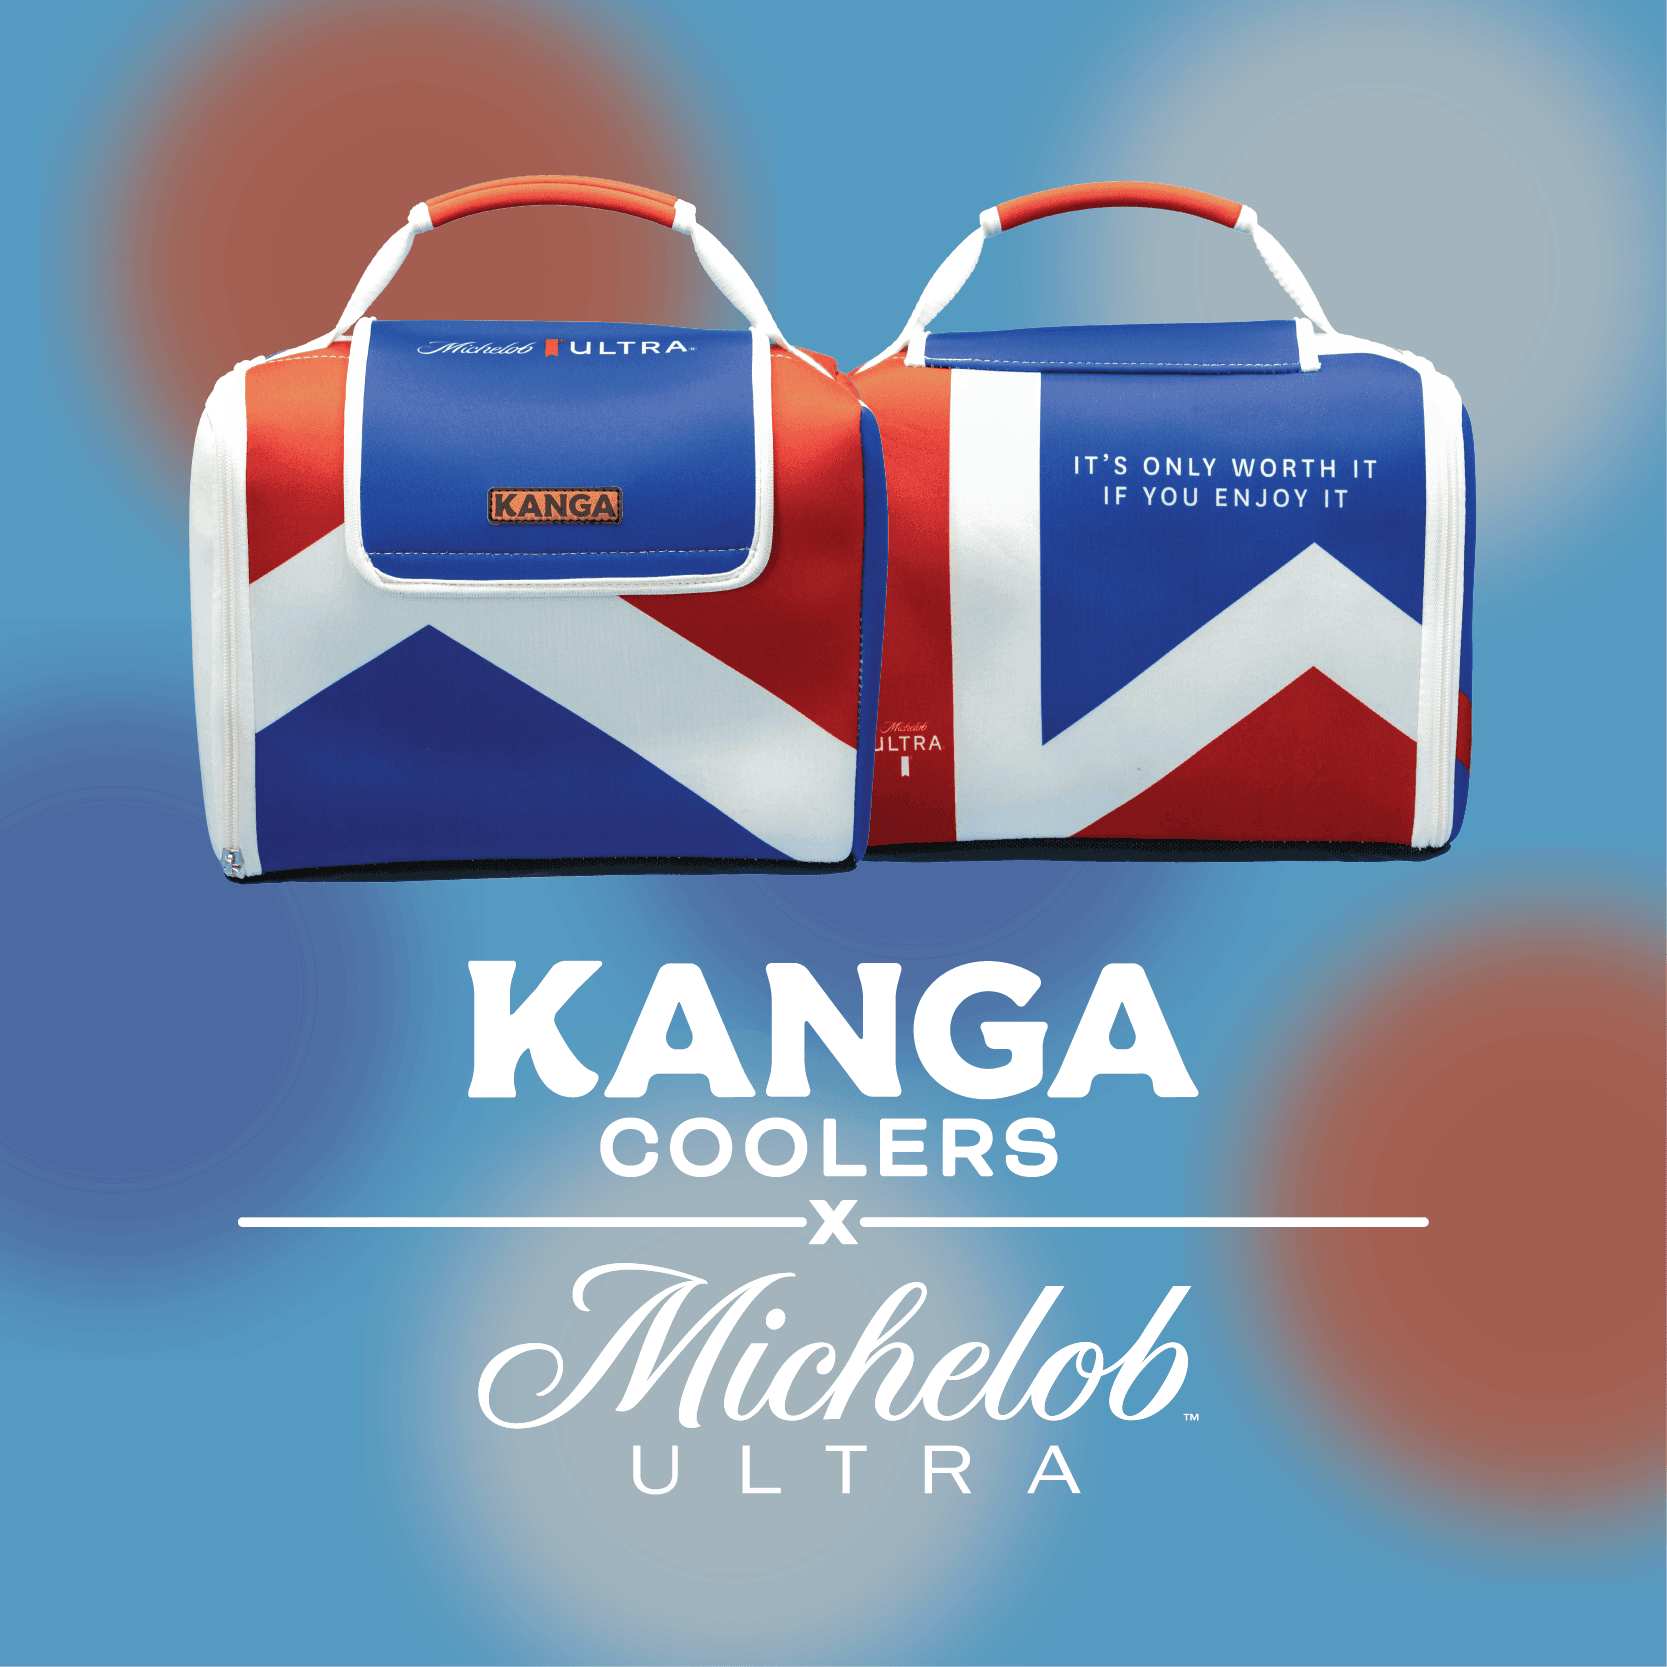 Kanga Cooler x Michelob ULTRA collab image